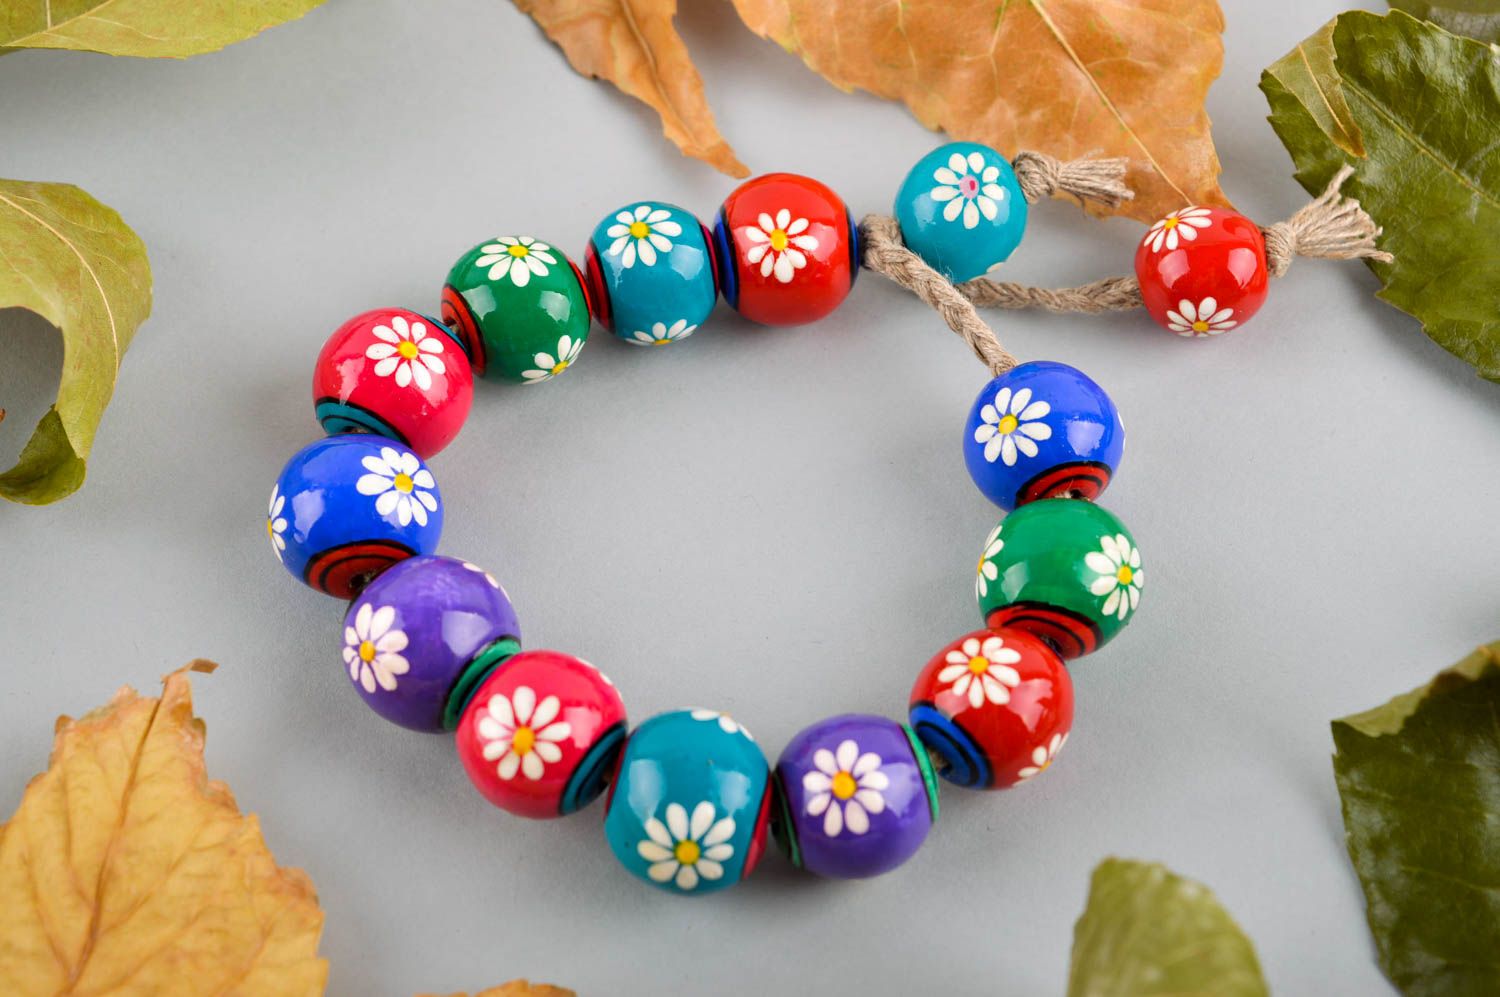 Handmade bracelet bead bracelet ceramic jewelry fashion accessories gift for her photo 1